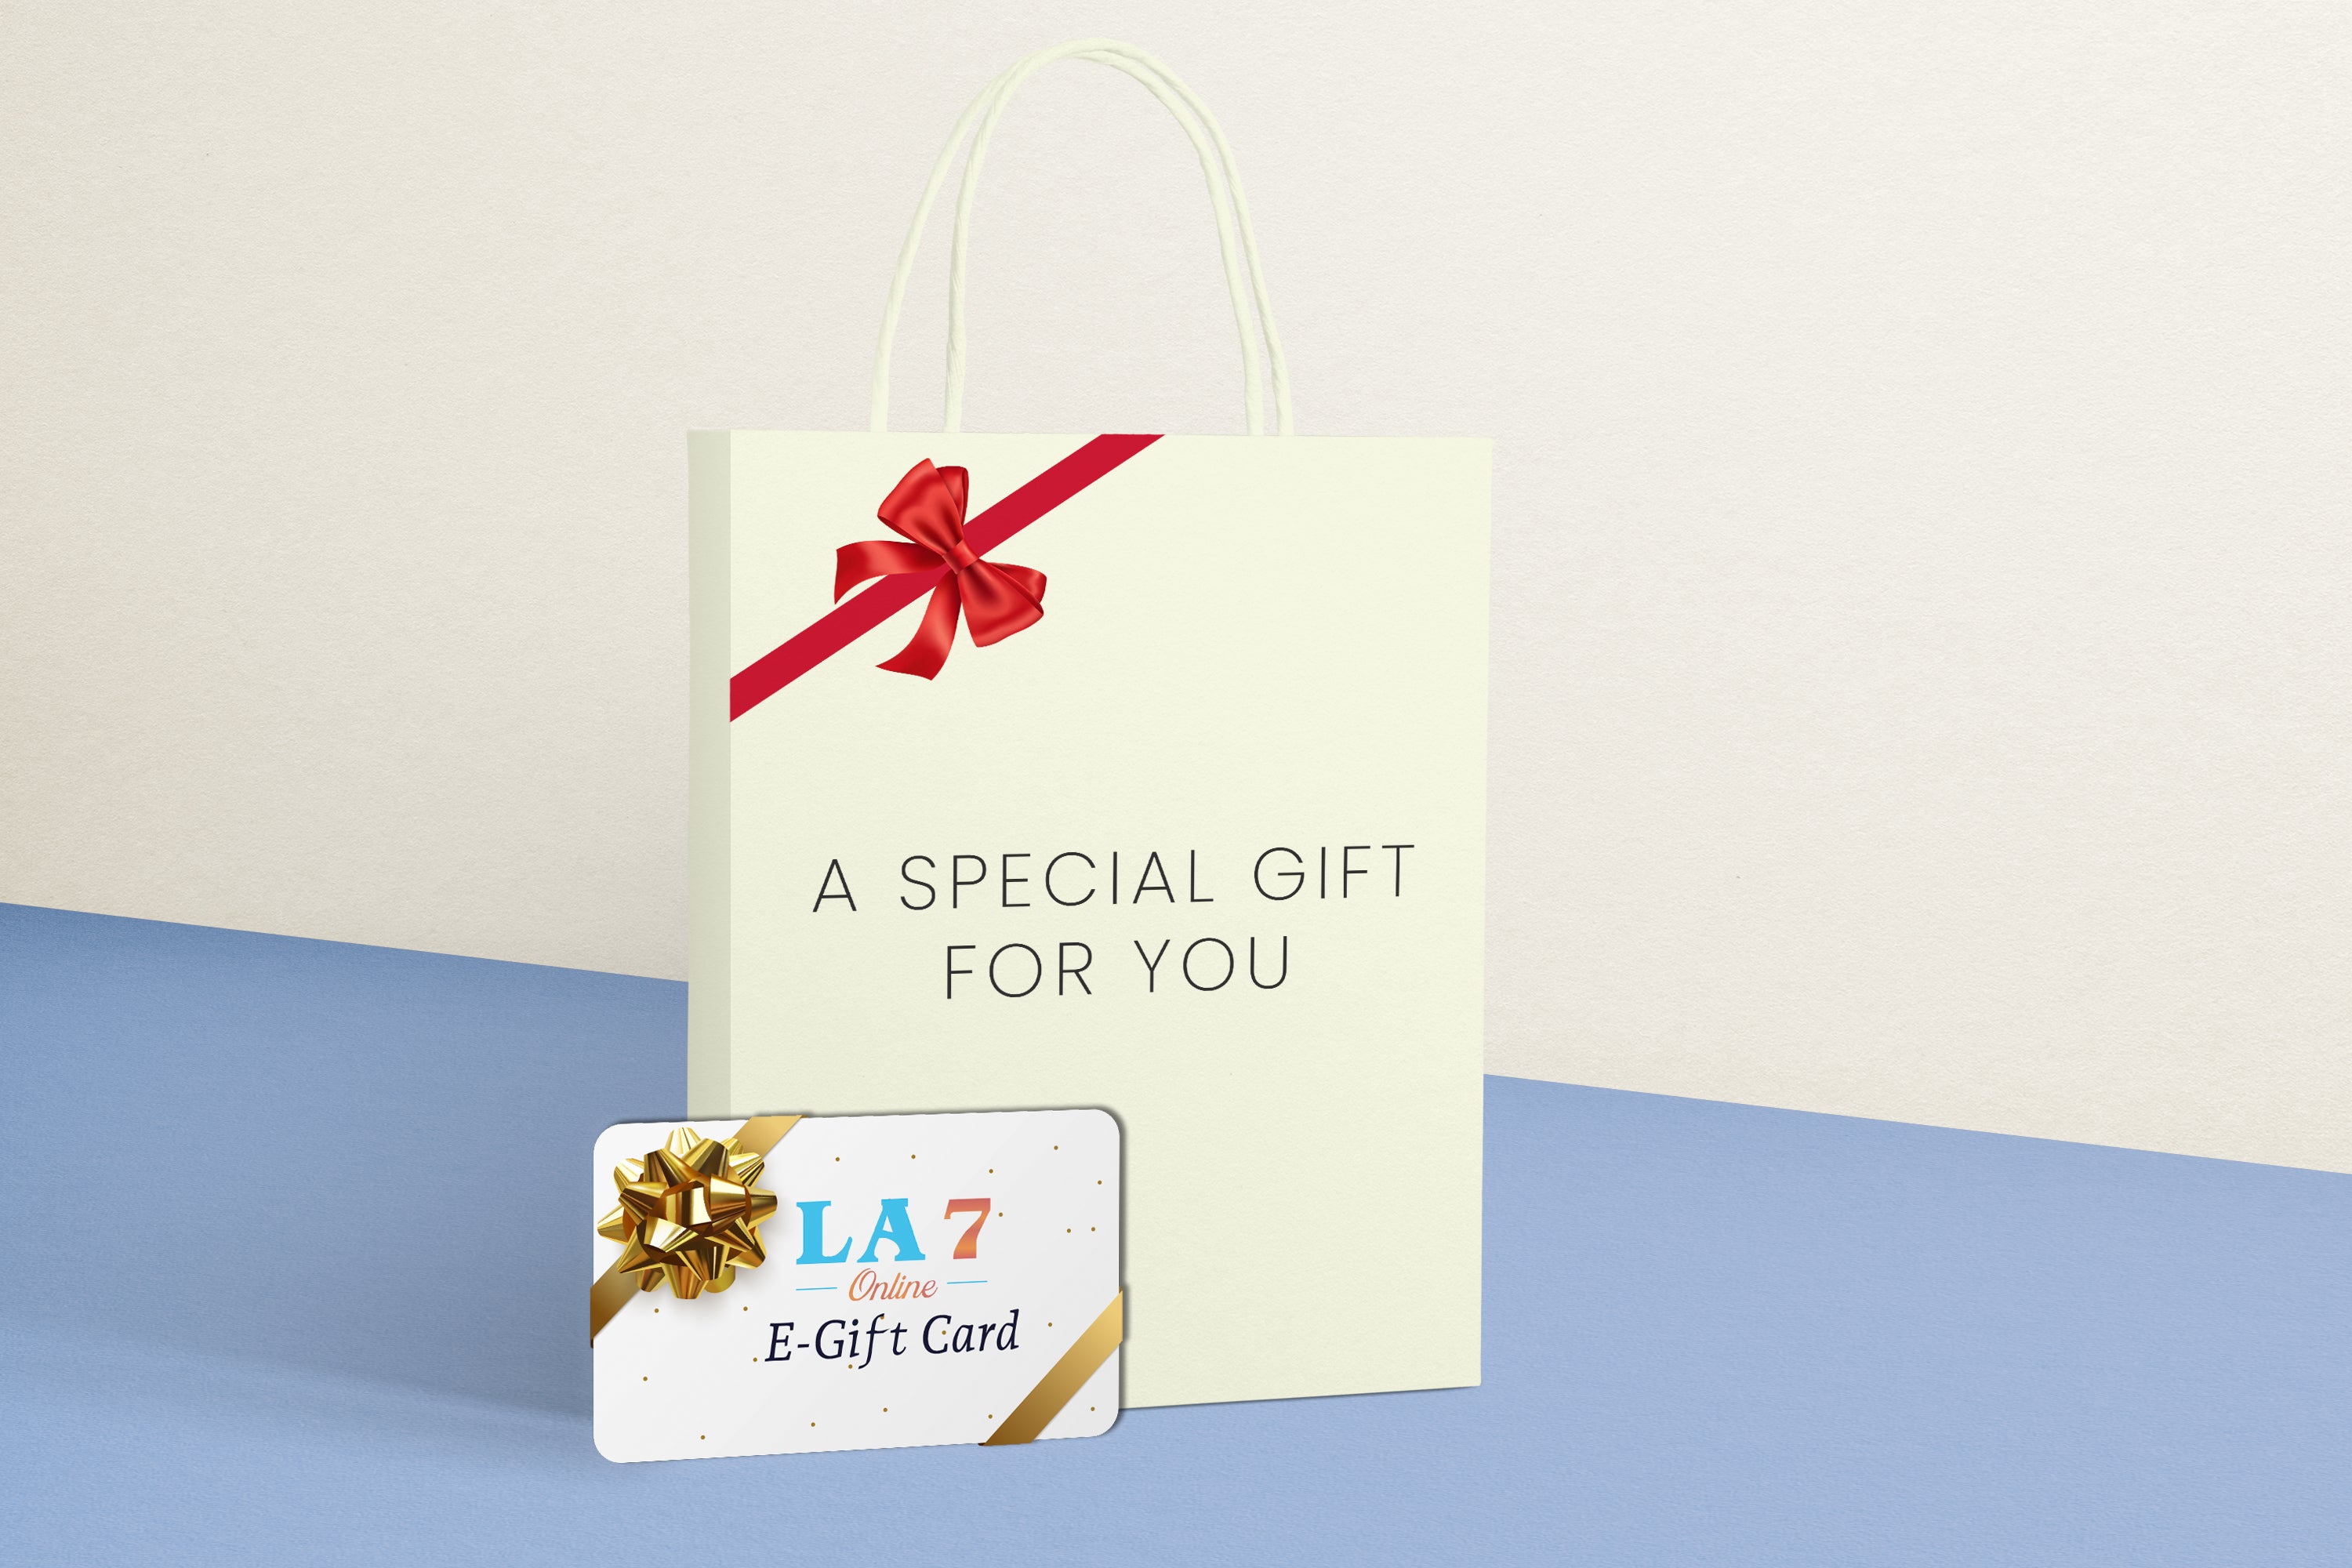 Gift card - LA7 ONLINE